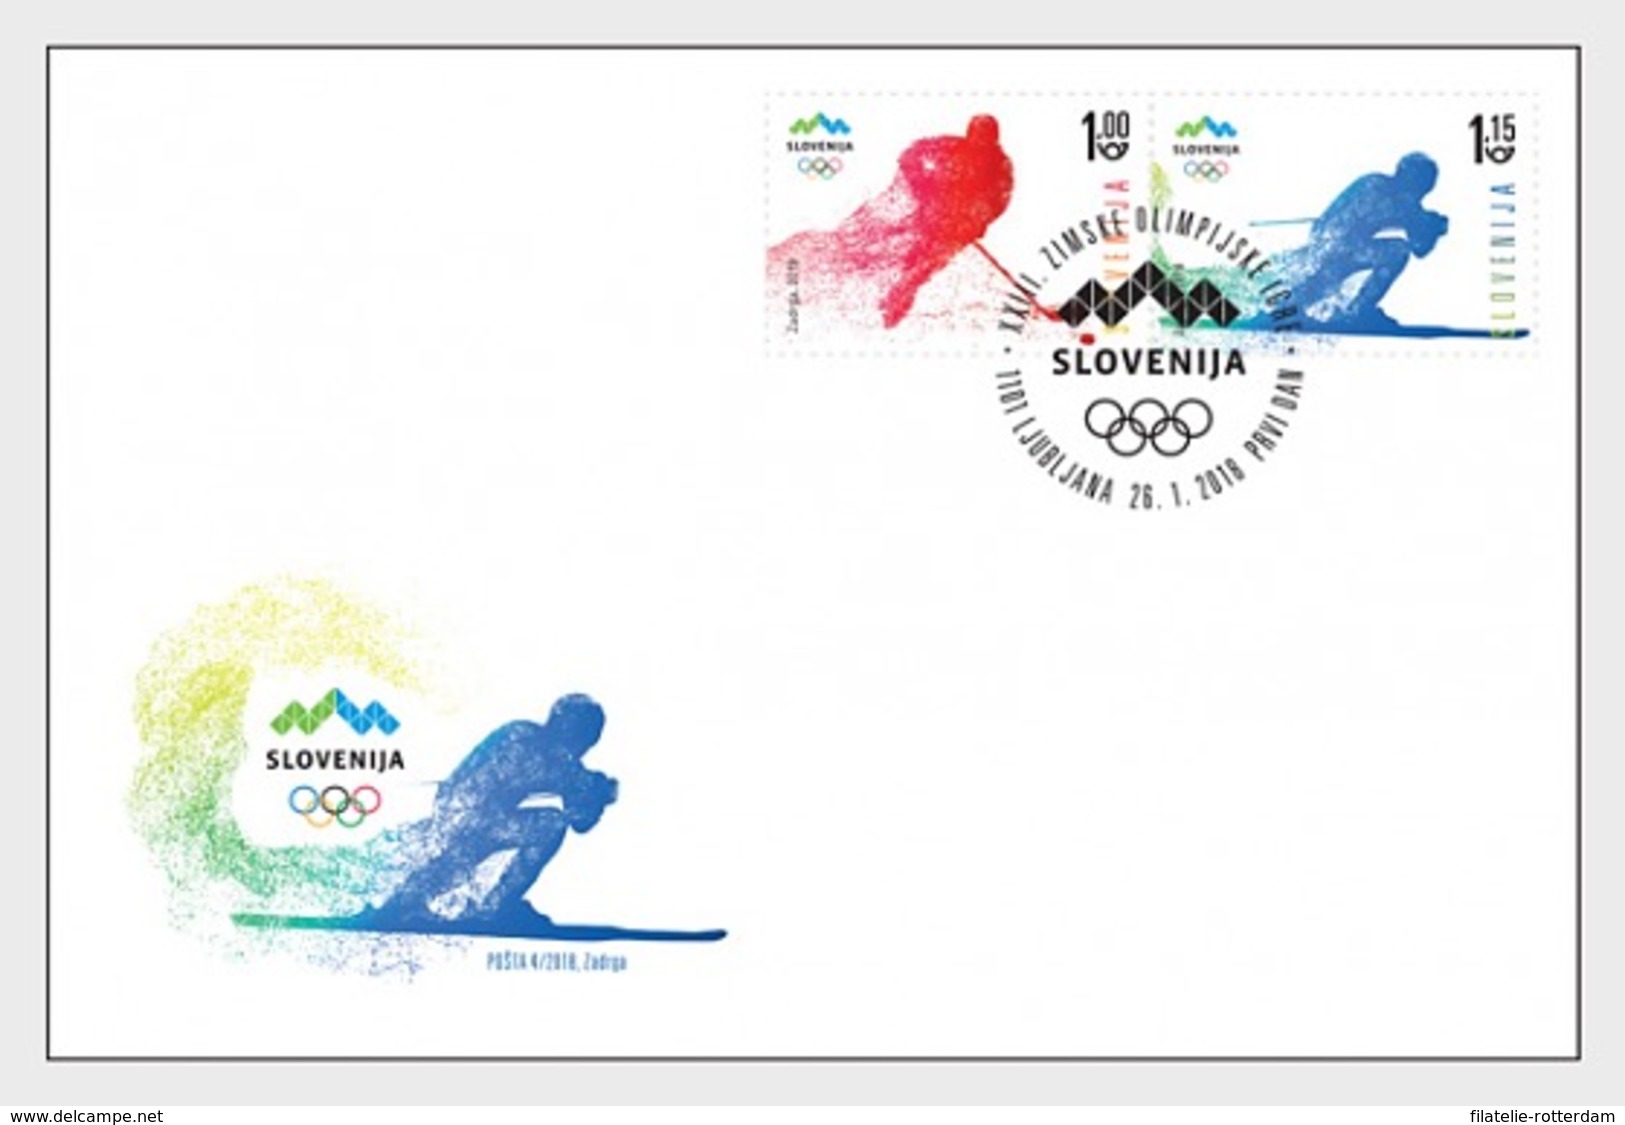 Slovenië / Slovenia - Postfris / MNH - FDC Olympische Spelen 2018 - Slovenië